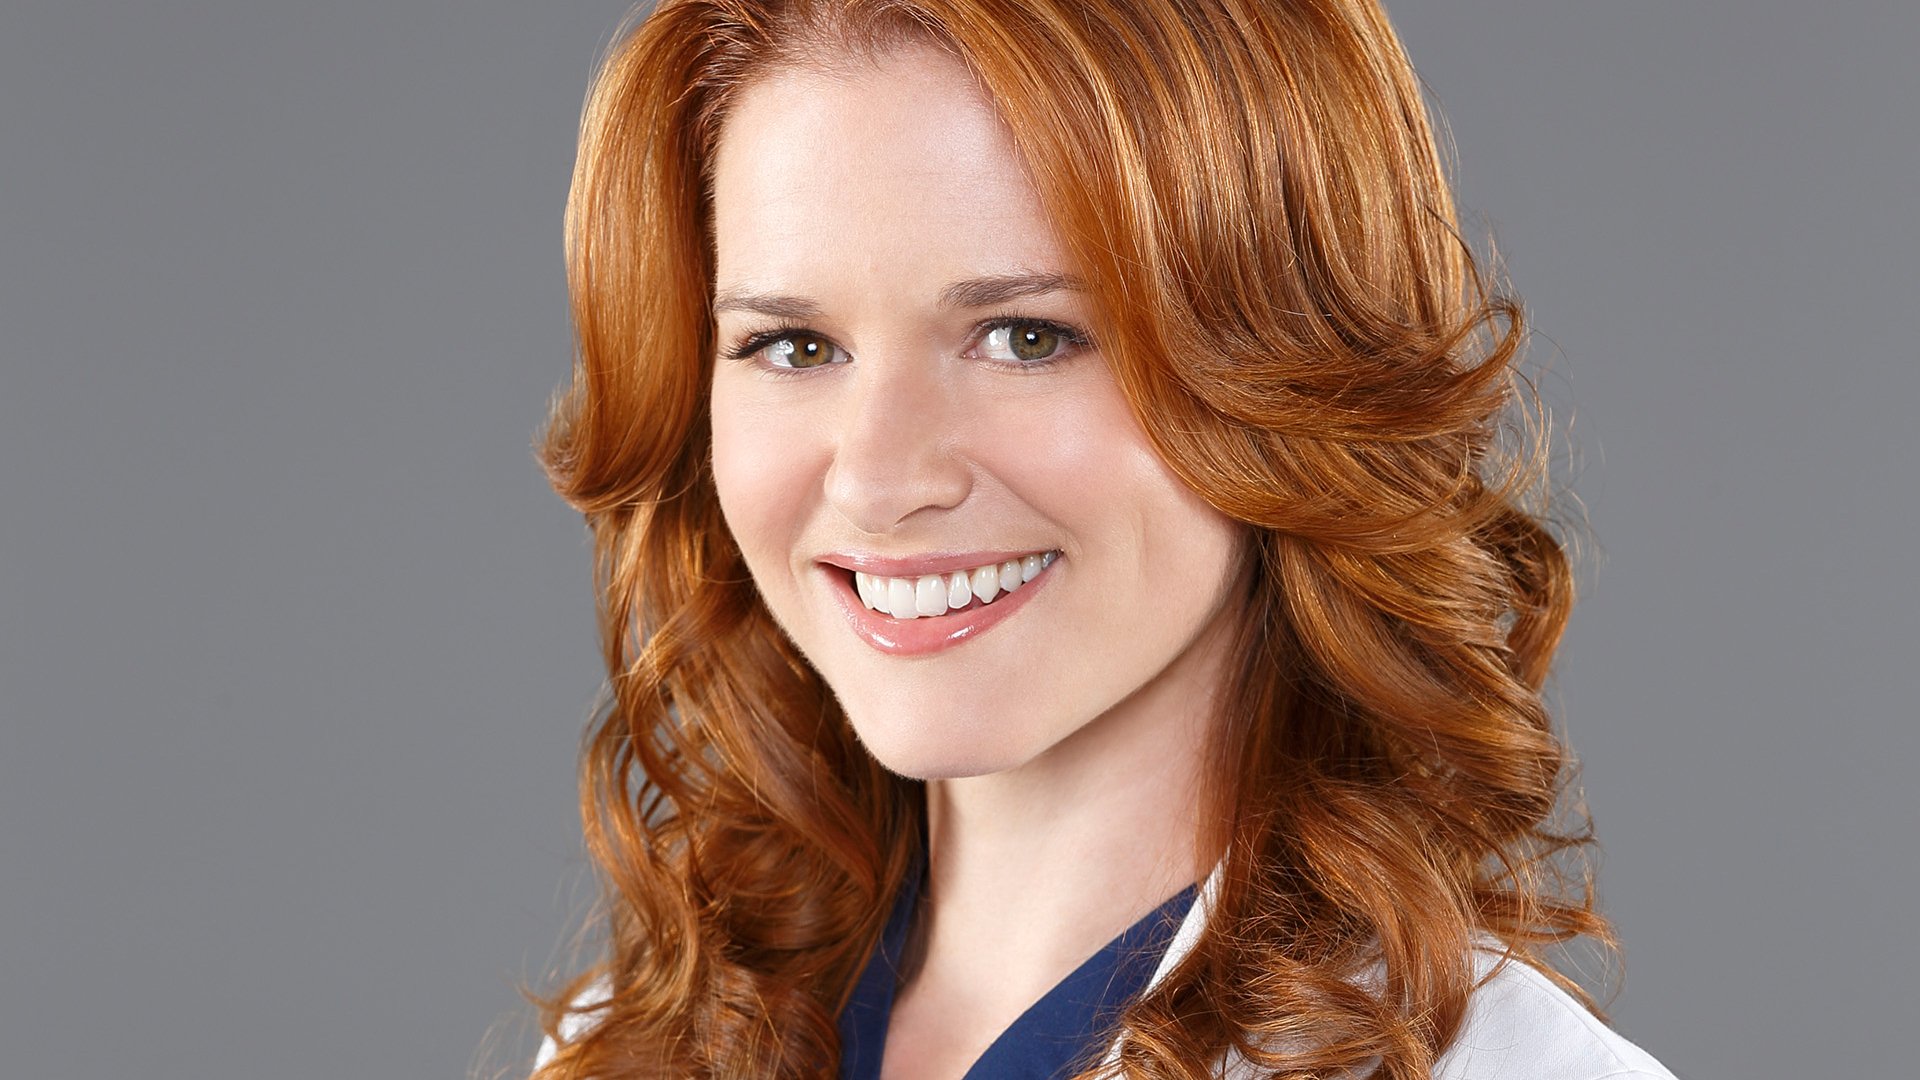 Headshot of Sarah Drew as April Kepner from ‘Grey’s Anatomy’